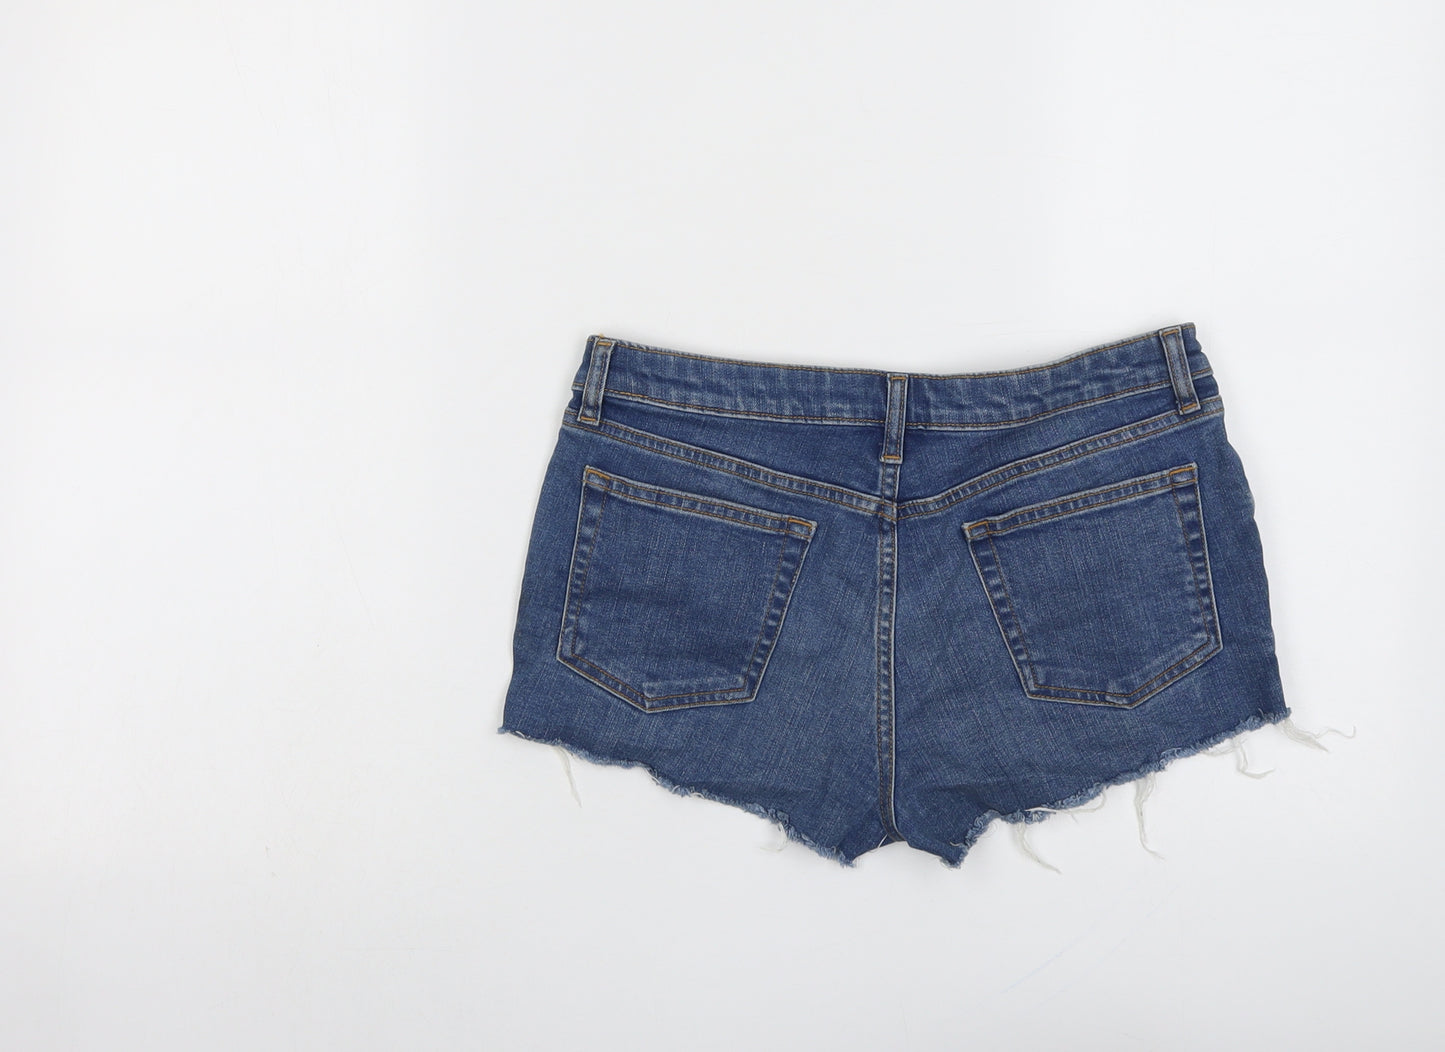 Topshop Womens Blue Cotton Hot Pants Shorts Size 10 L3 in Regular Button - Frayed Hem